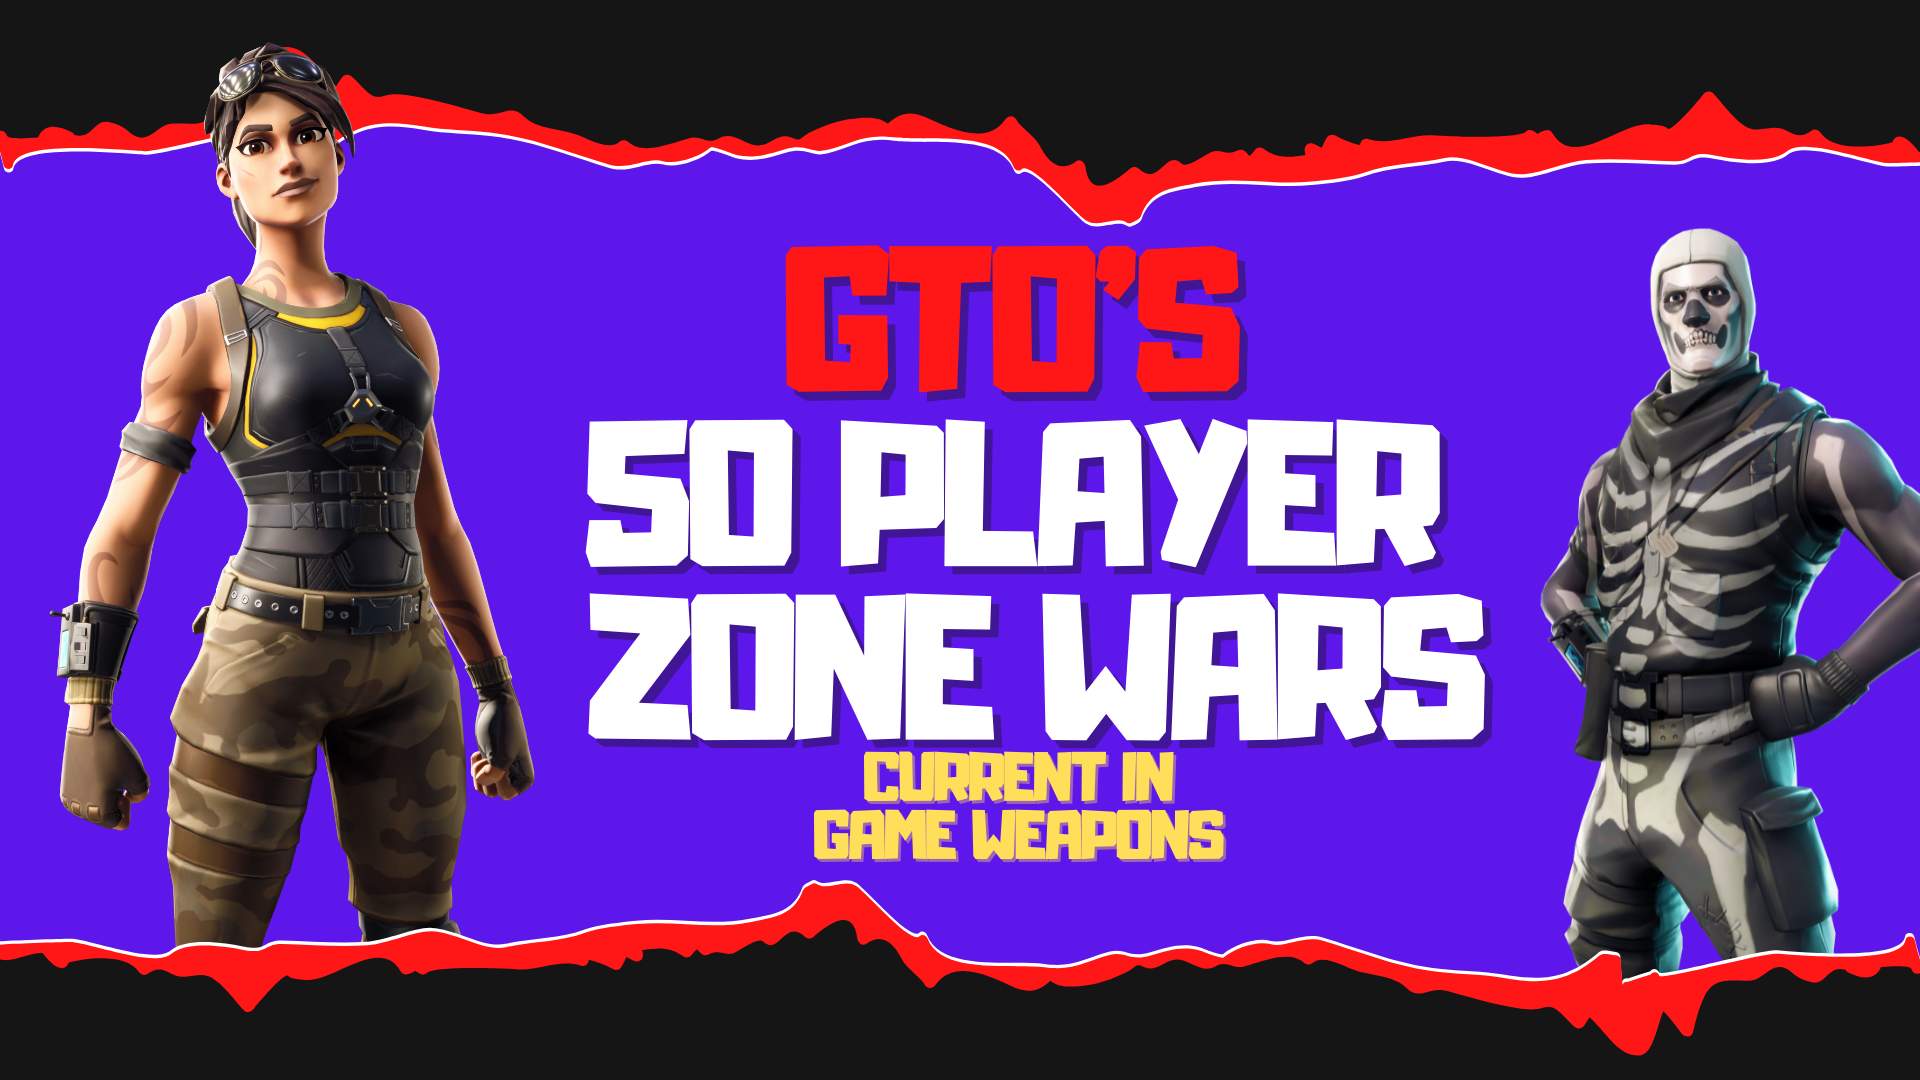 GTO'S 50 PLAYER ZONE WARS